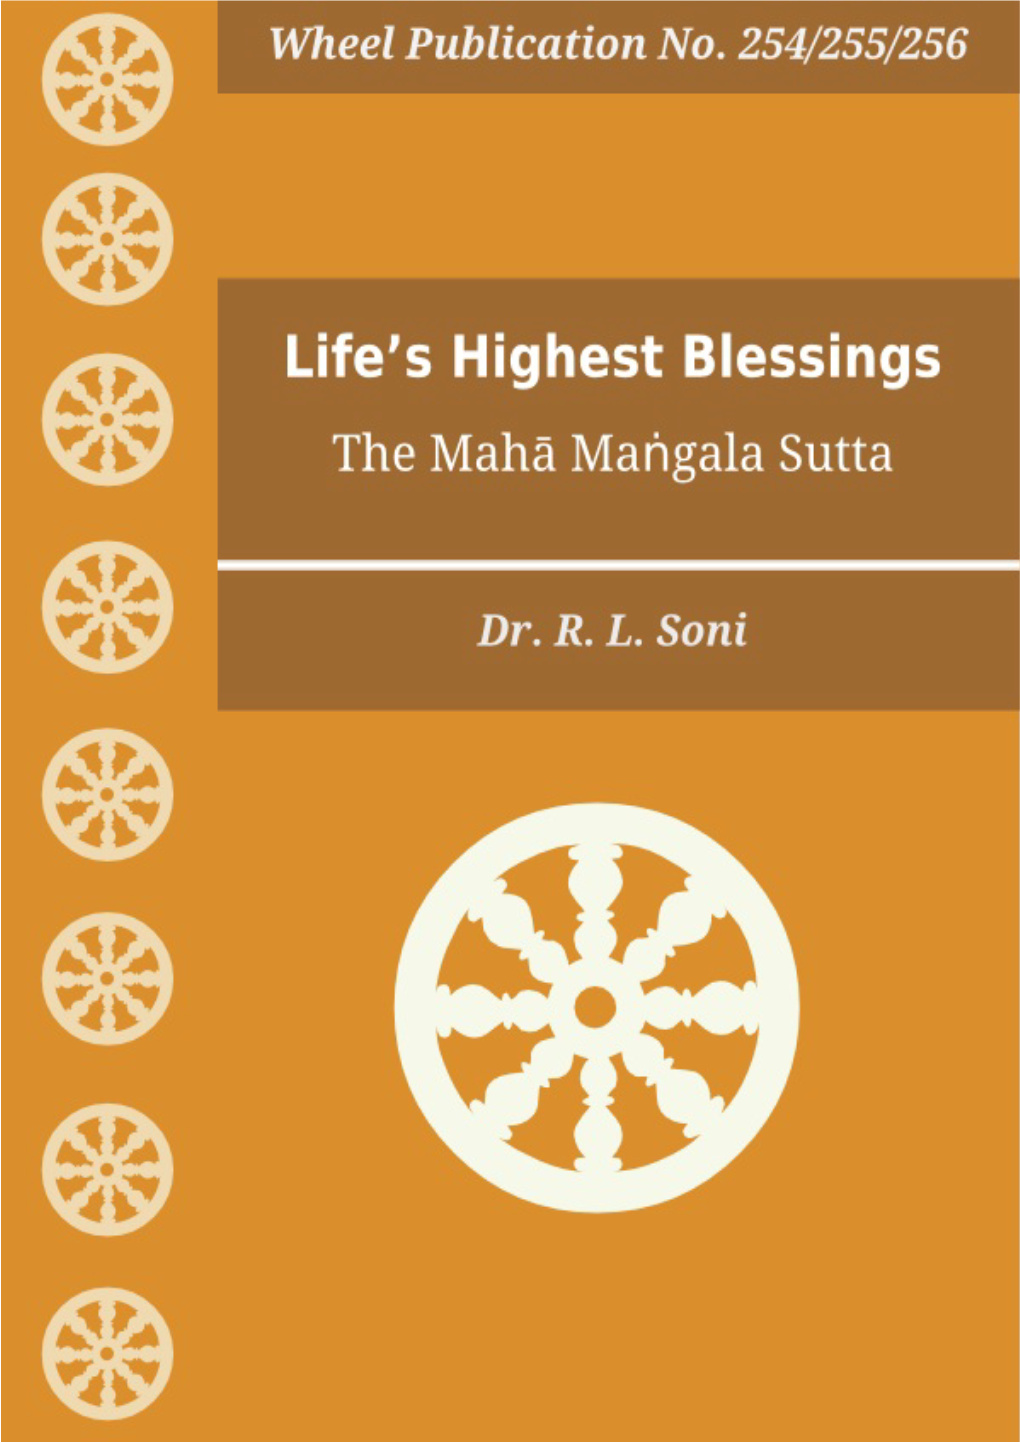 Wh 254/255/256. Life's Highest Blessings: the Mahā Maṅgala Sutta